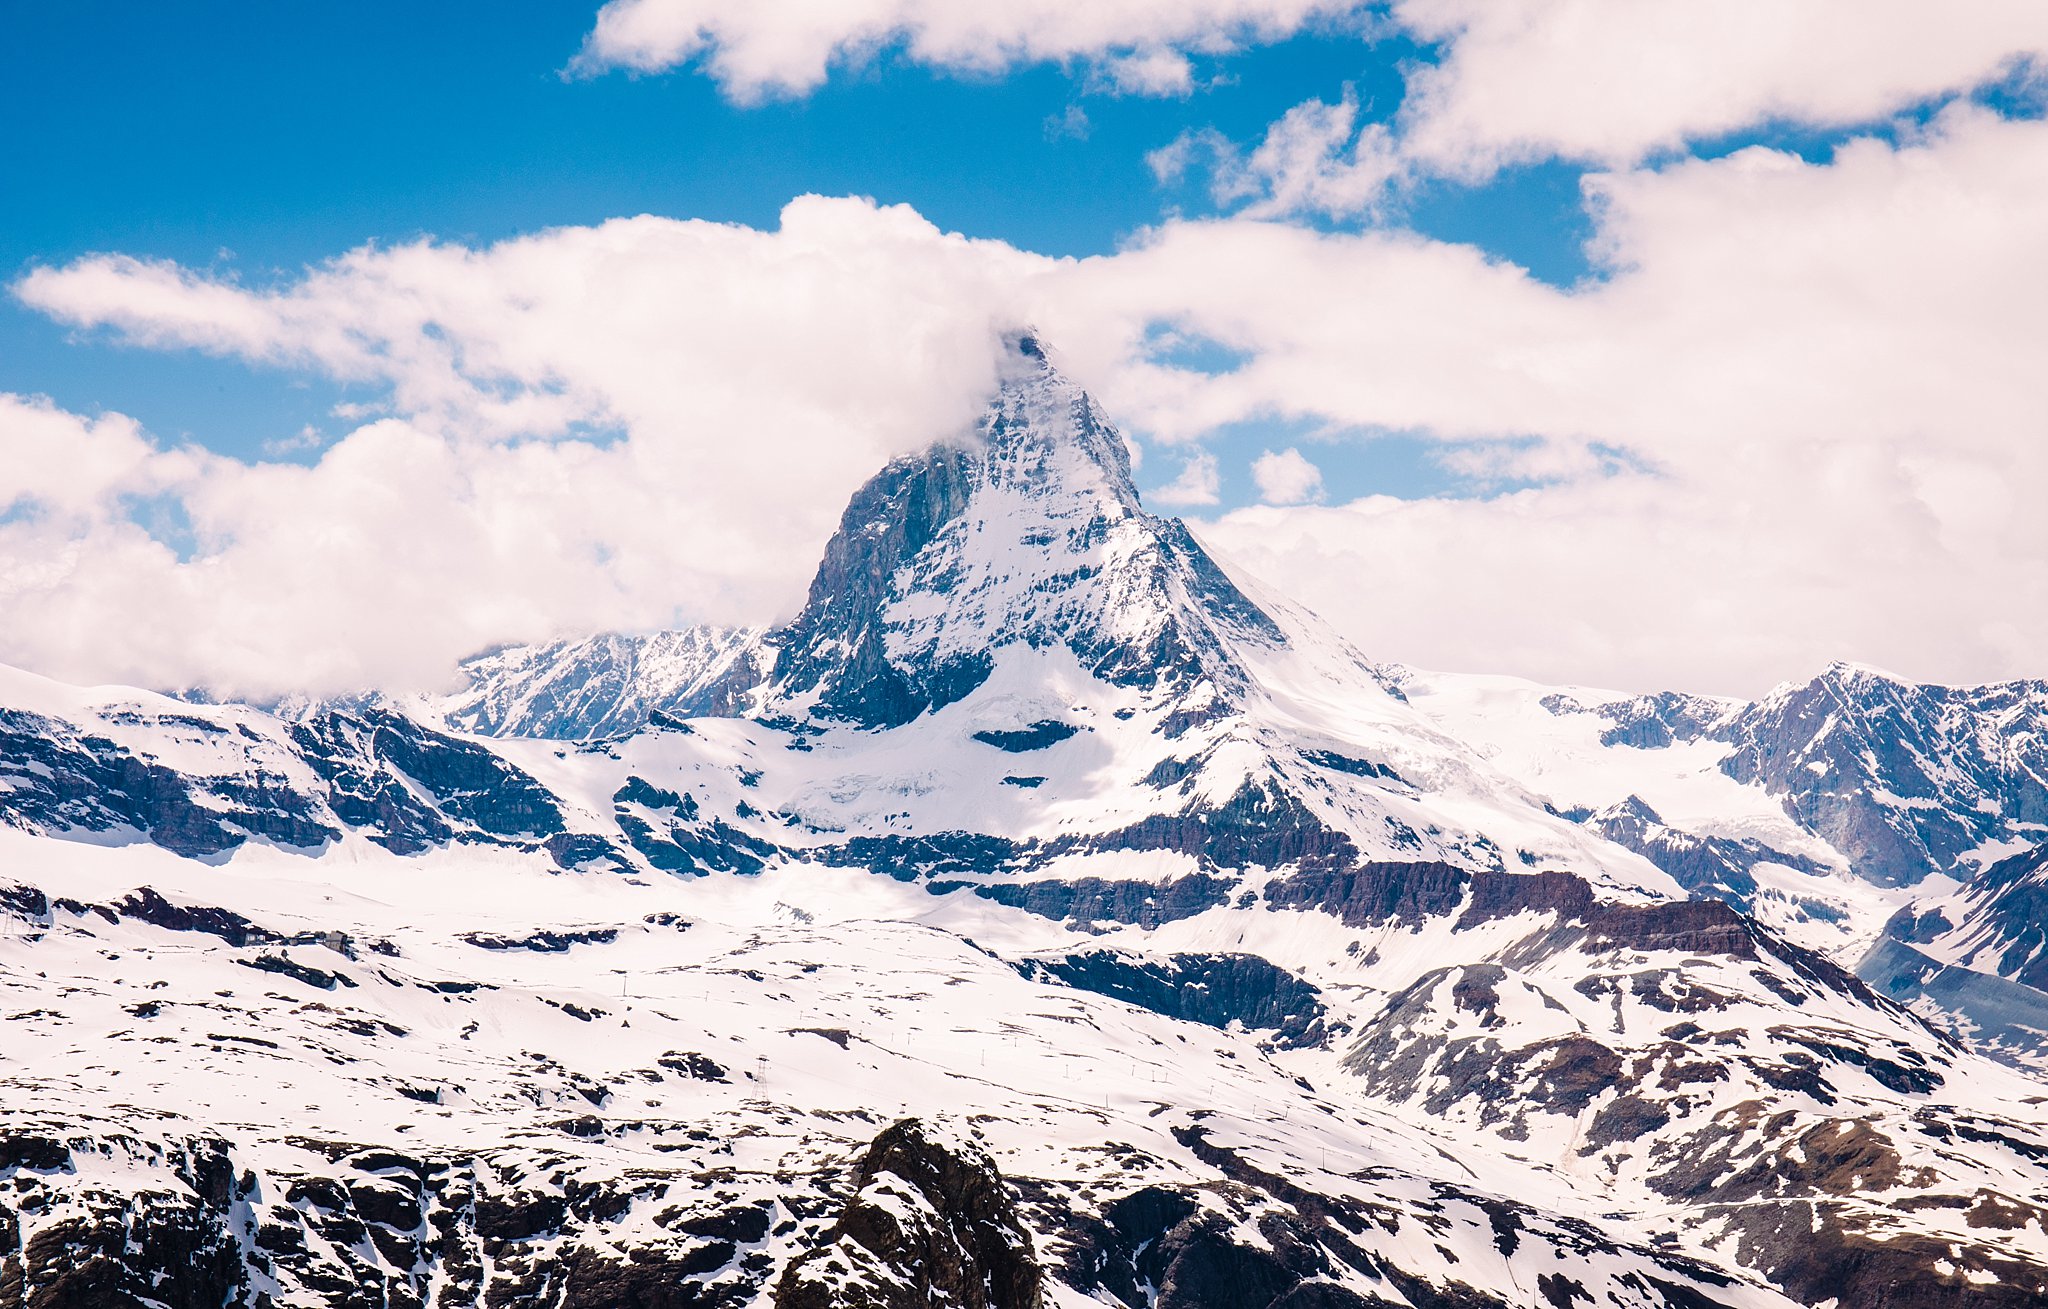 Visiting the Matterhorn in Zermatt, Switzerland